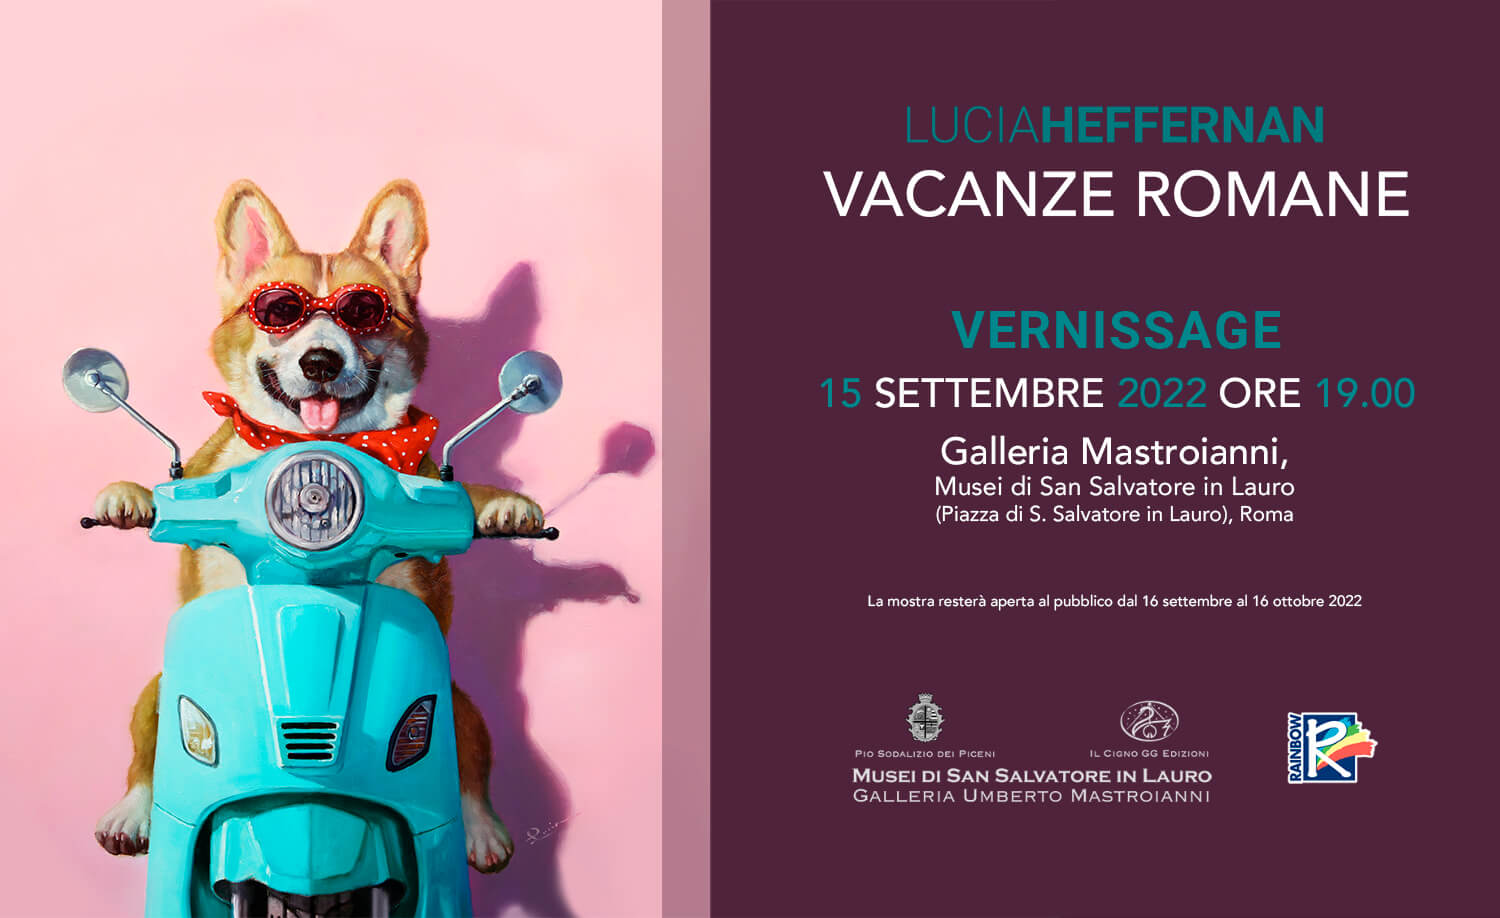 Rome to host Lucia Heffernan’s first European exhibition “VACANZE ROMANE” image